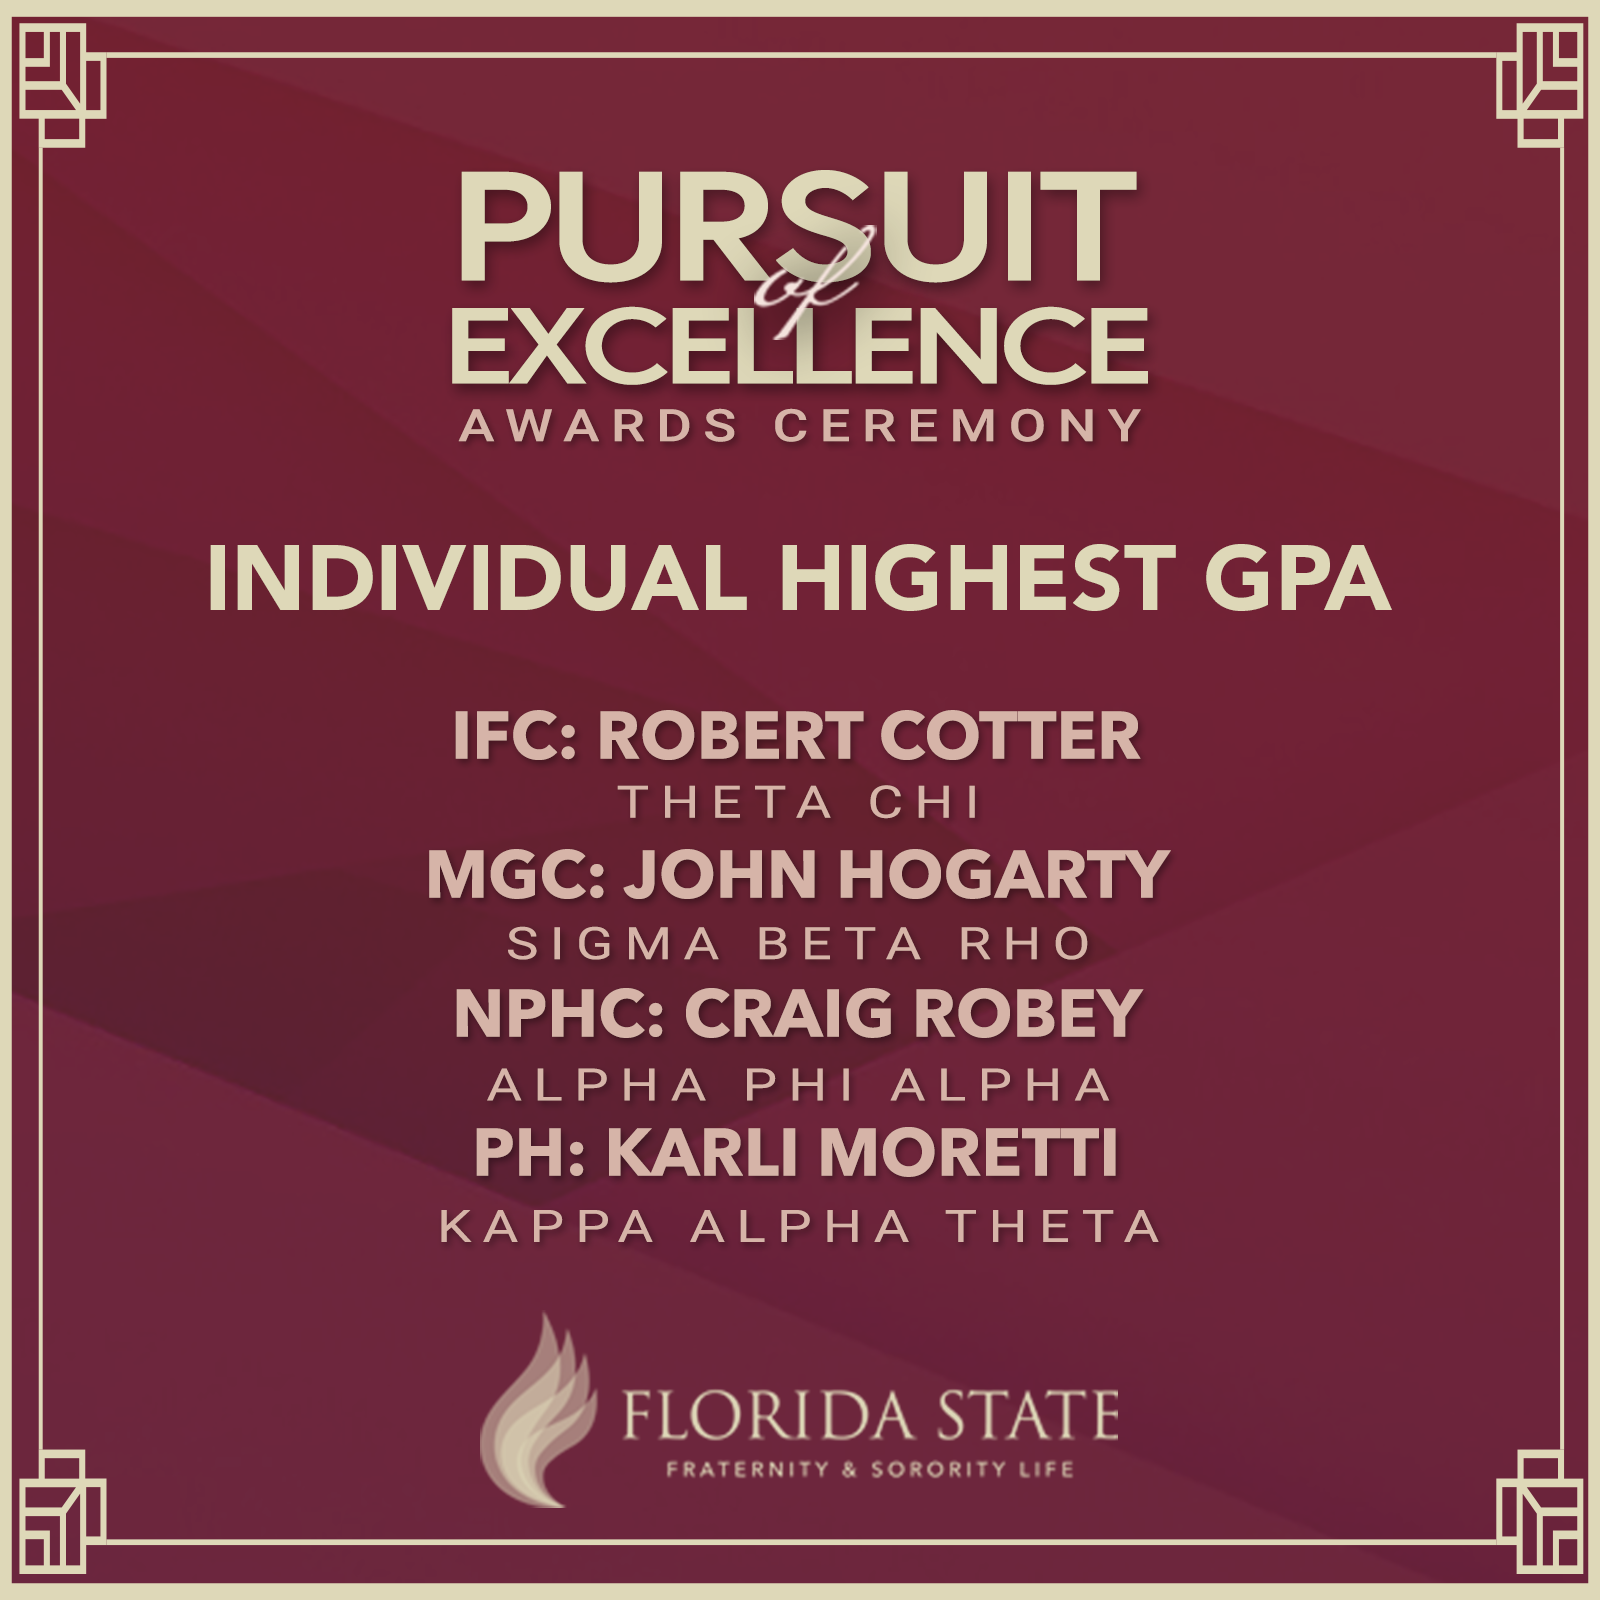 Individual highest GPA winners - Robert Cotter, John Hogarty, Craig Robey, and Karli moretti